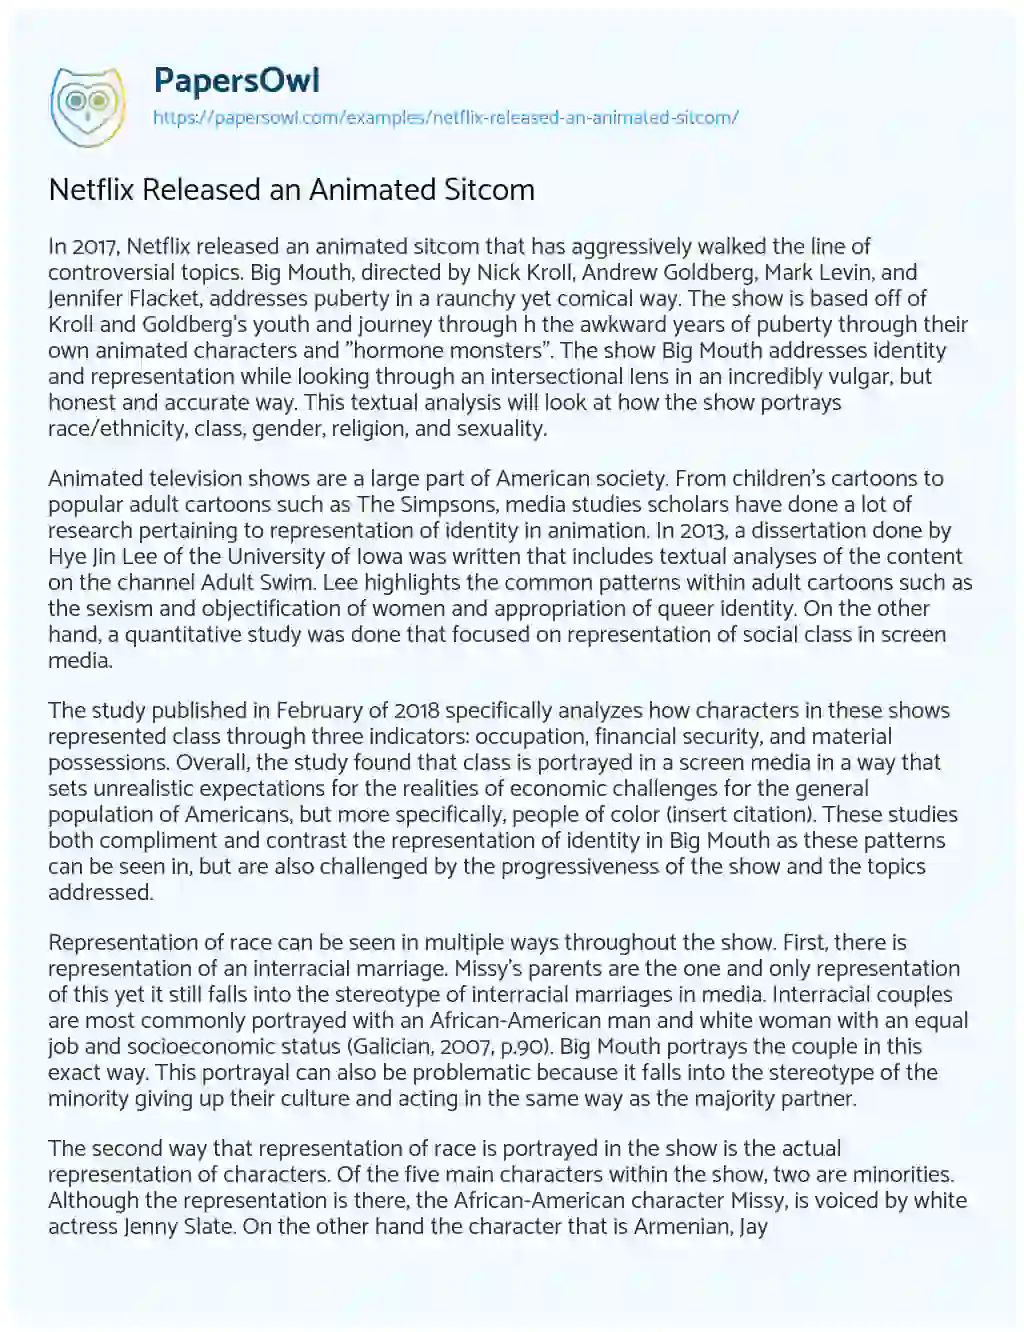 Netflix Released an Animated Sitcom essay